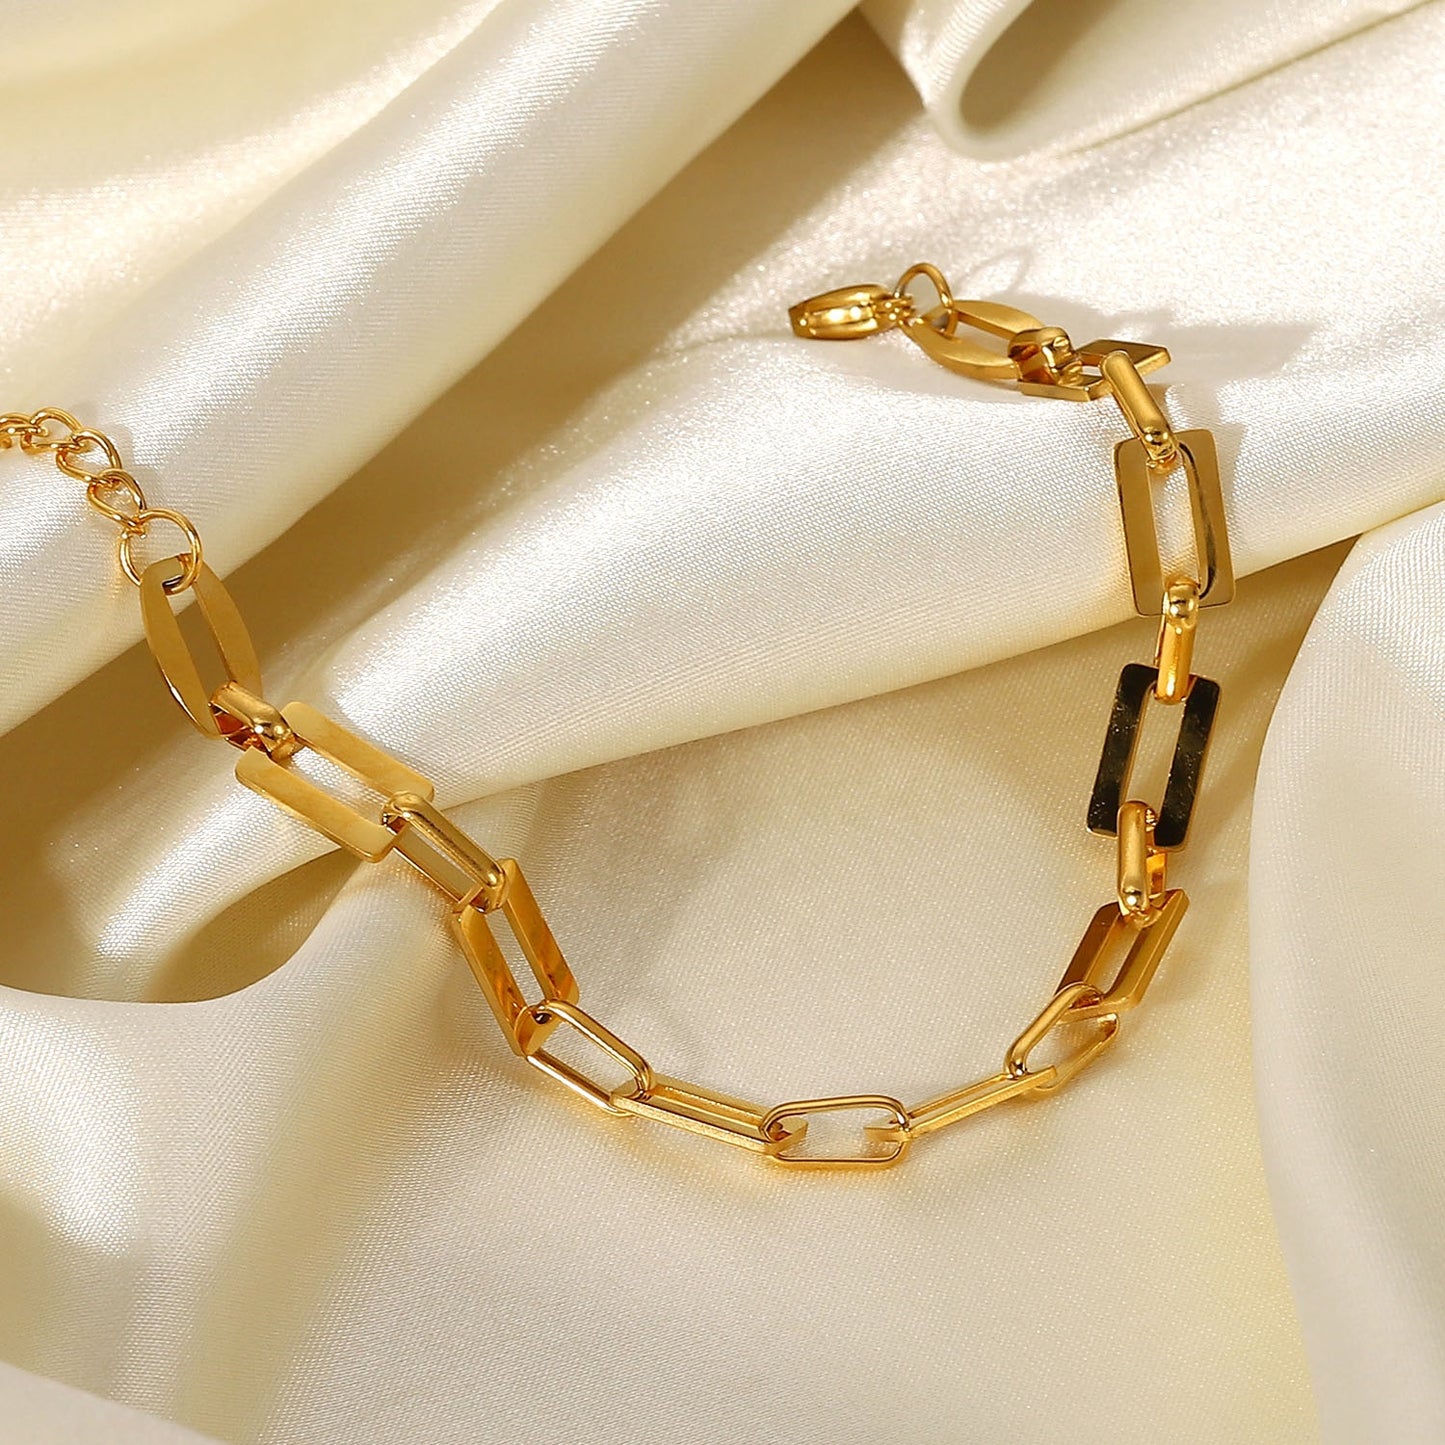 Gold Link Chain Bracelet